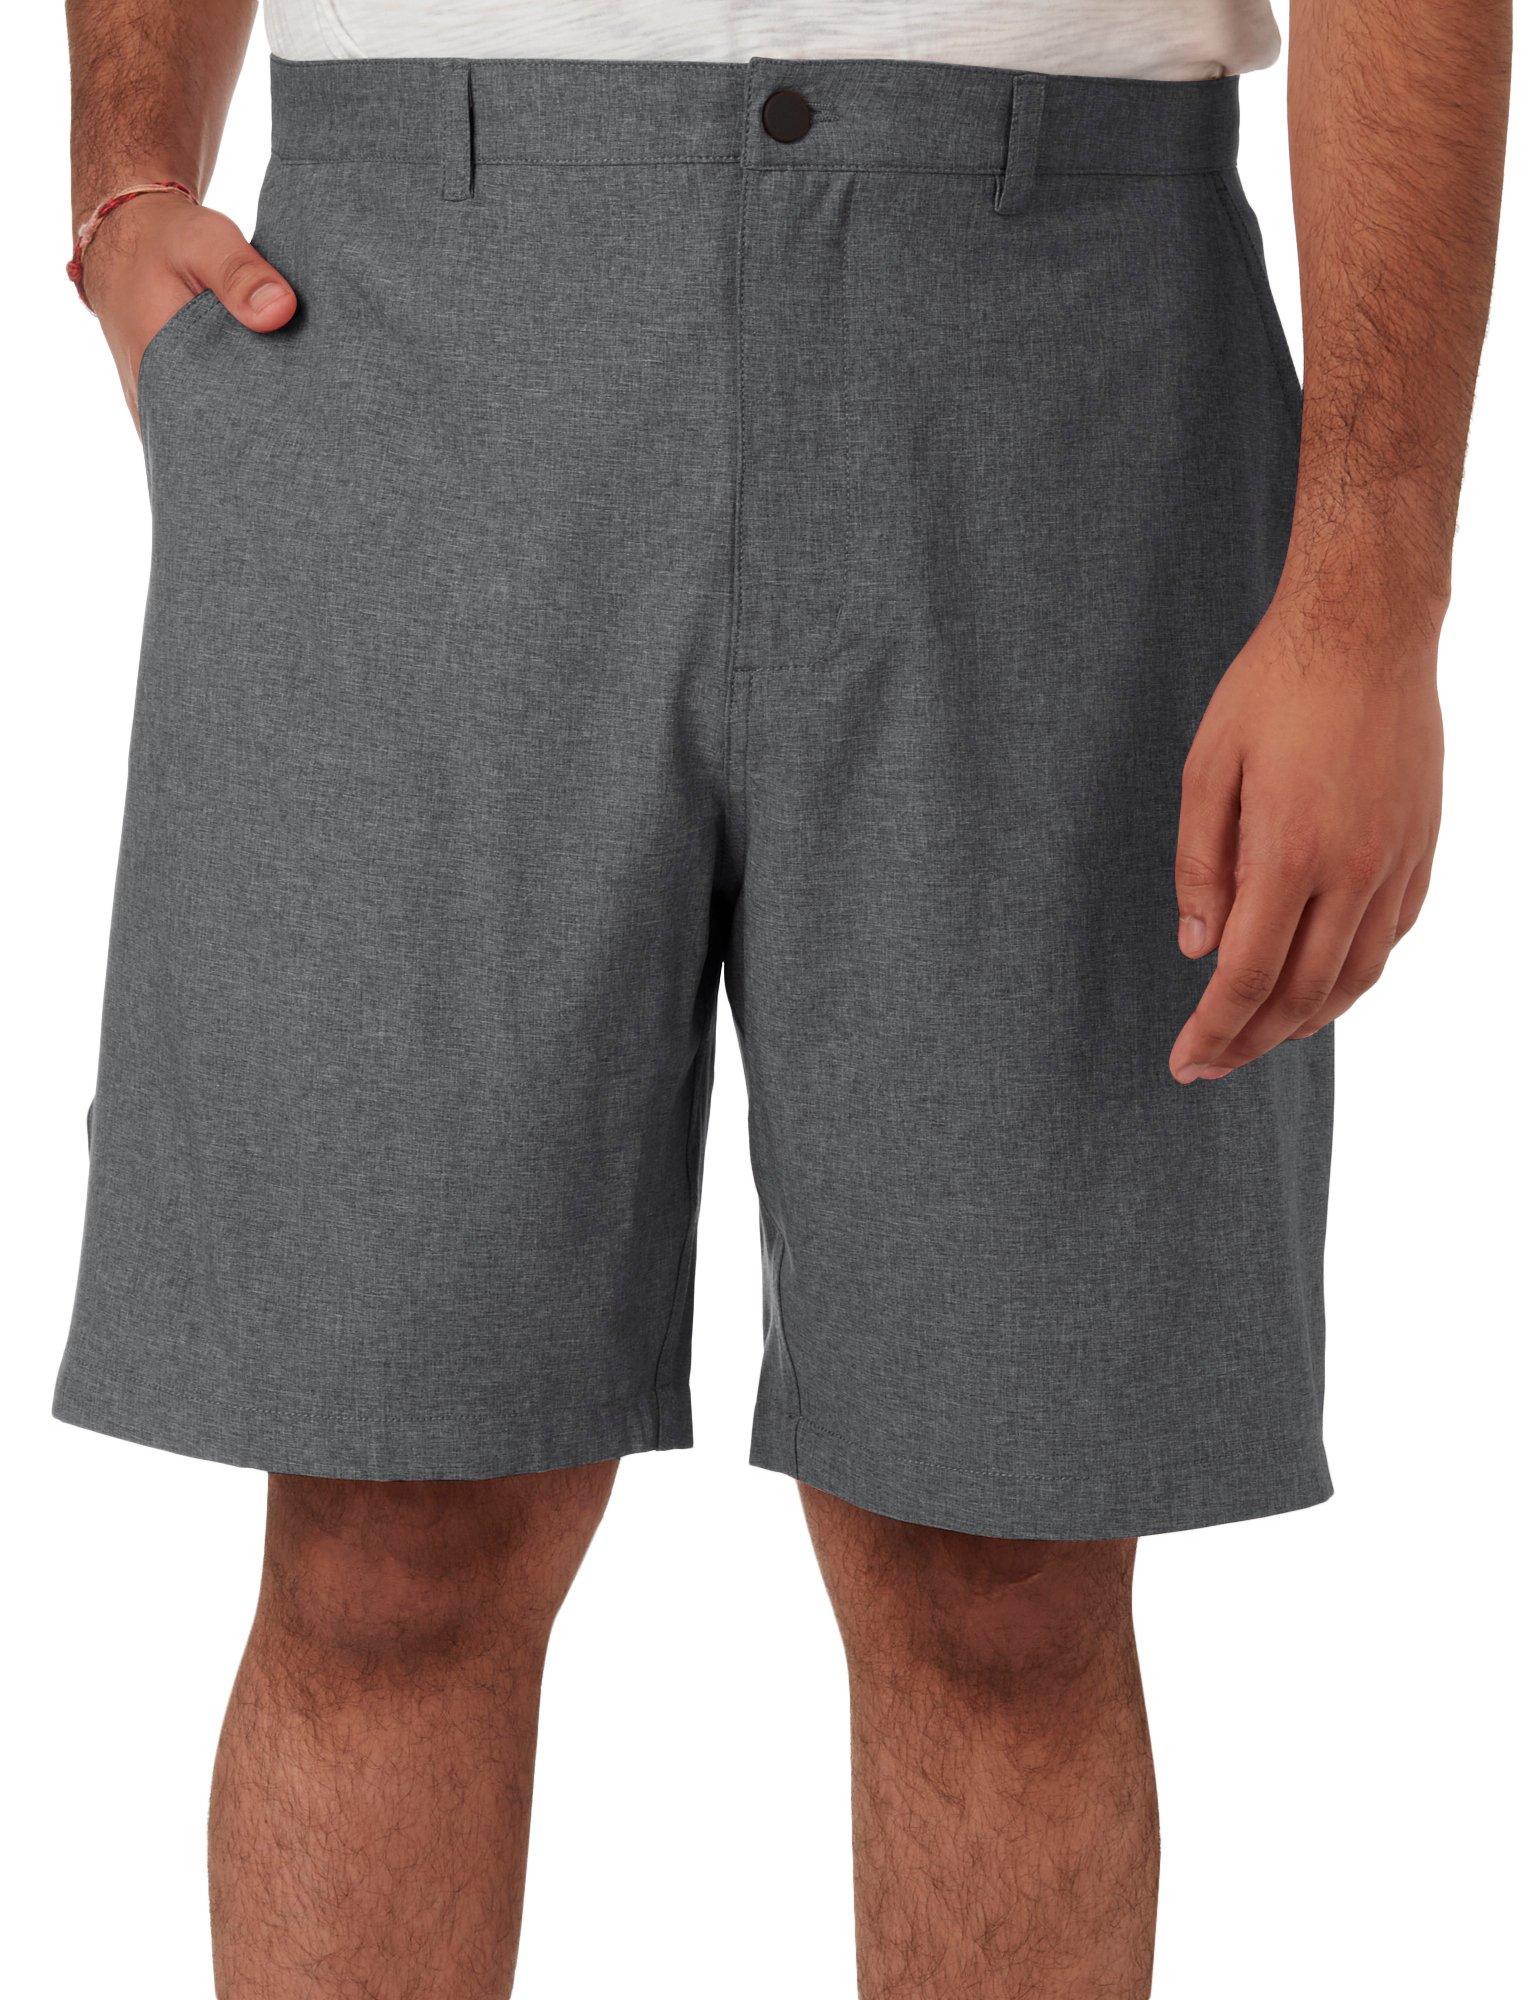 Anglers Edge Grey Fishing Shorts - Lowes Menswear